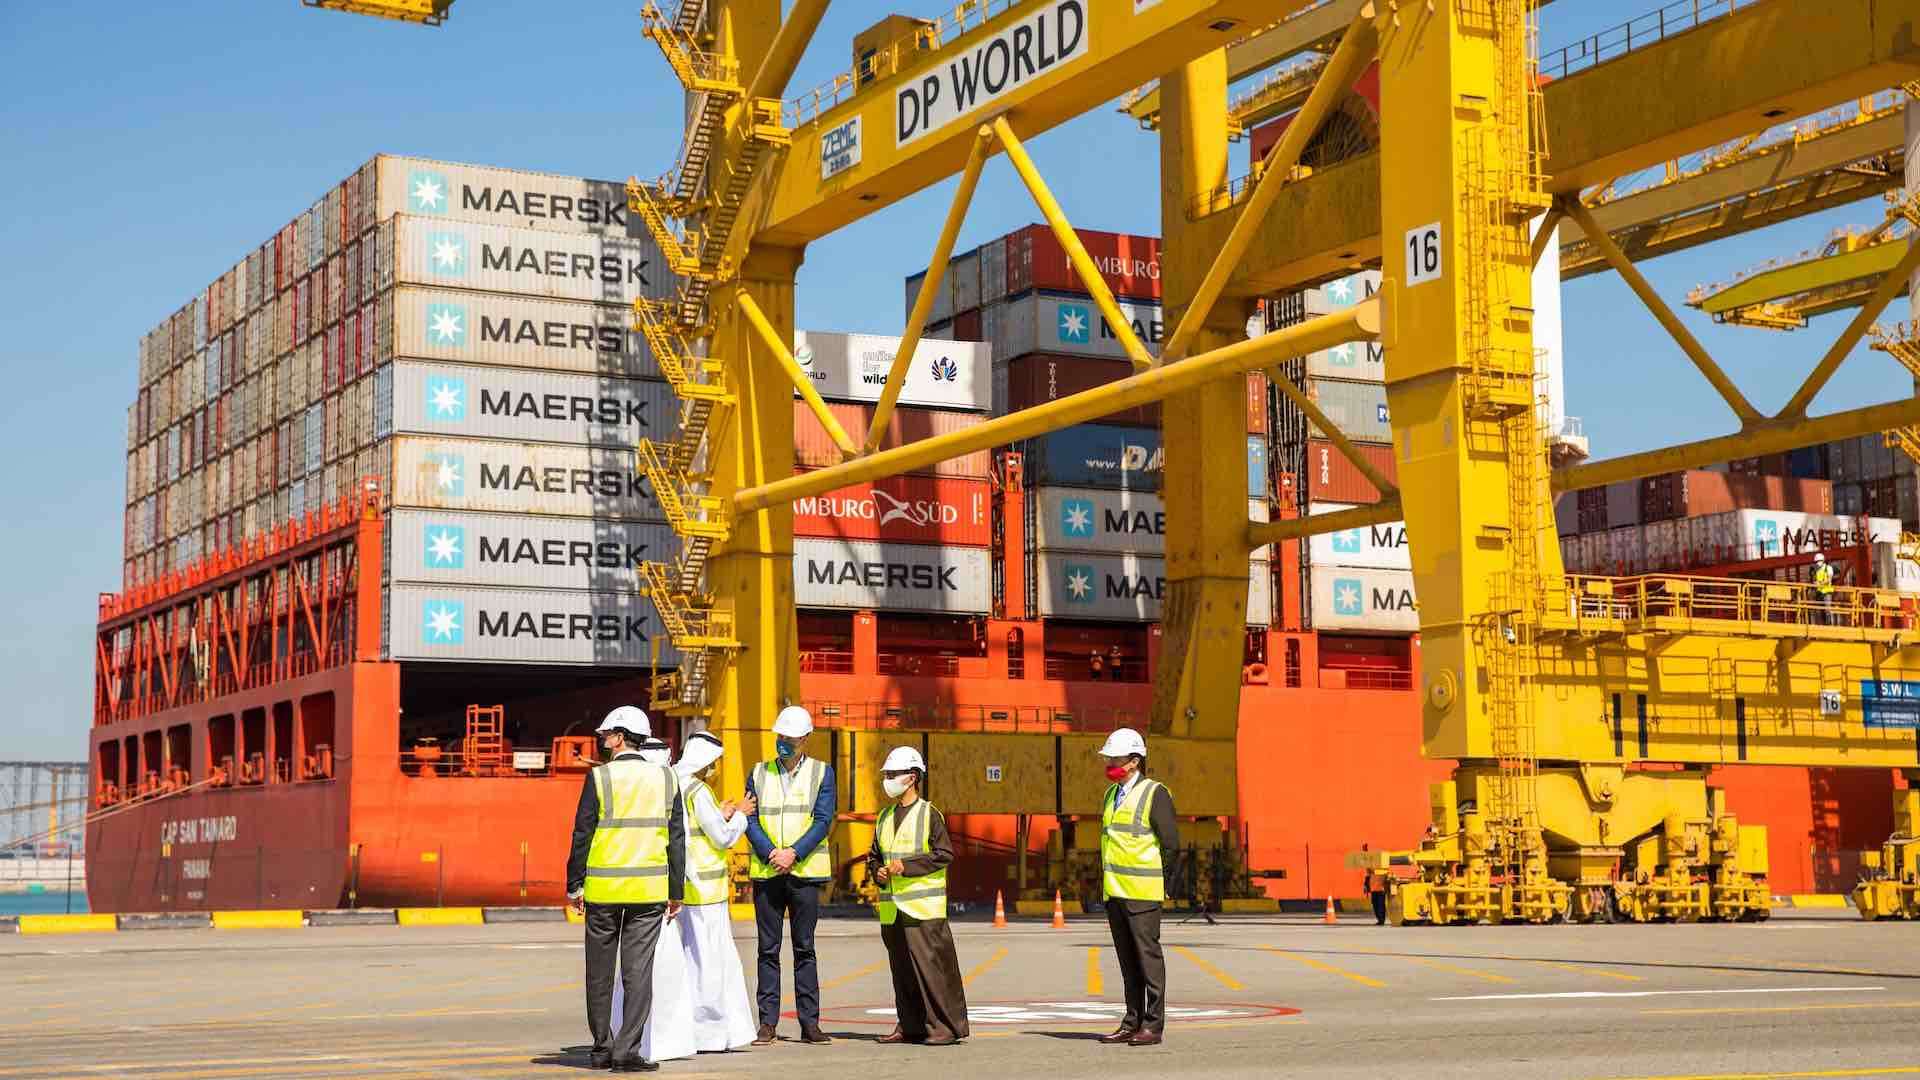 DP World and Maersk ink a long-term partnership at Jebel Ali